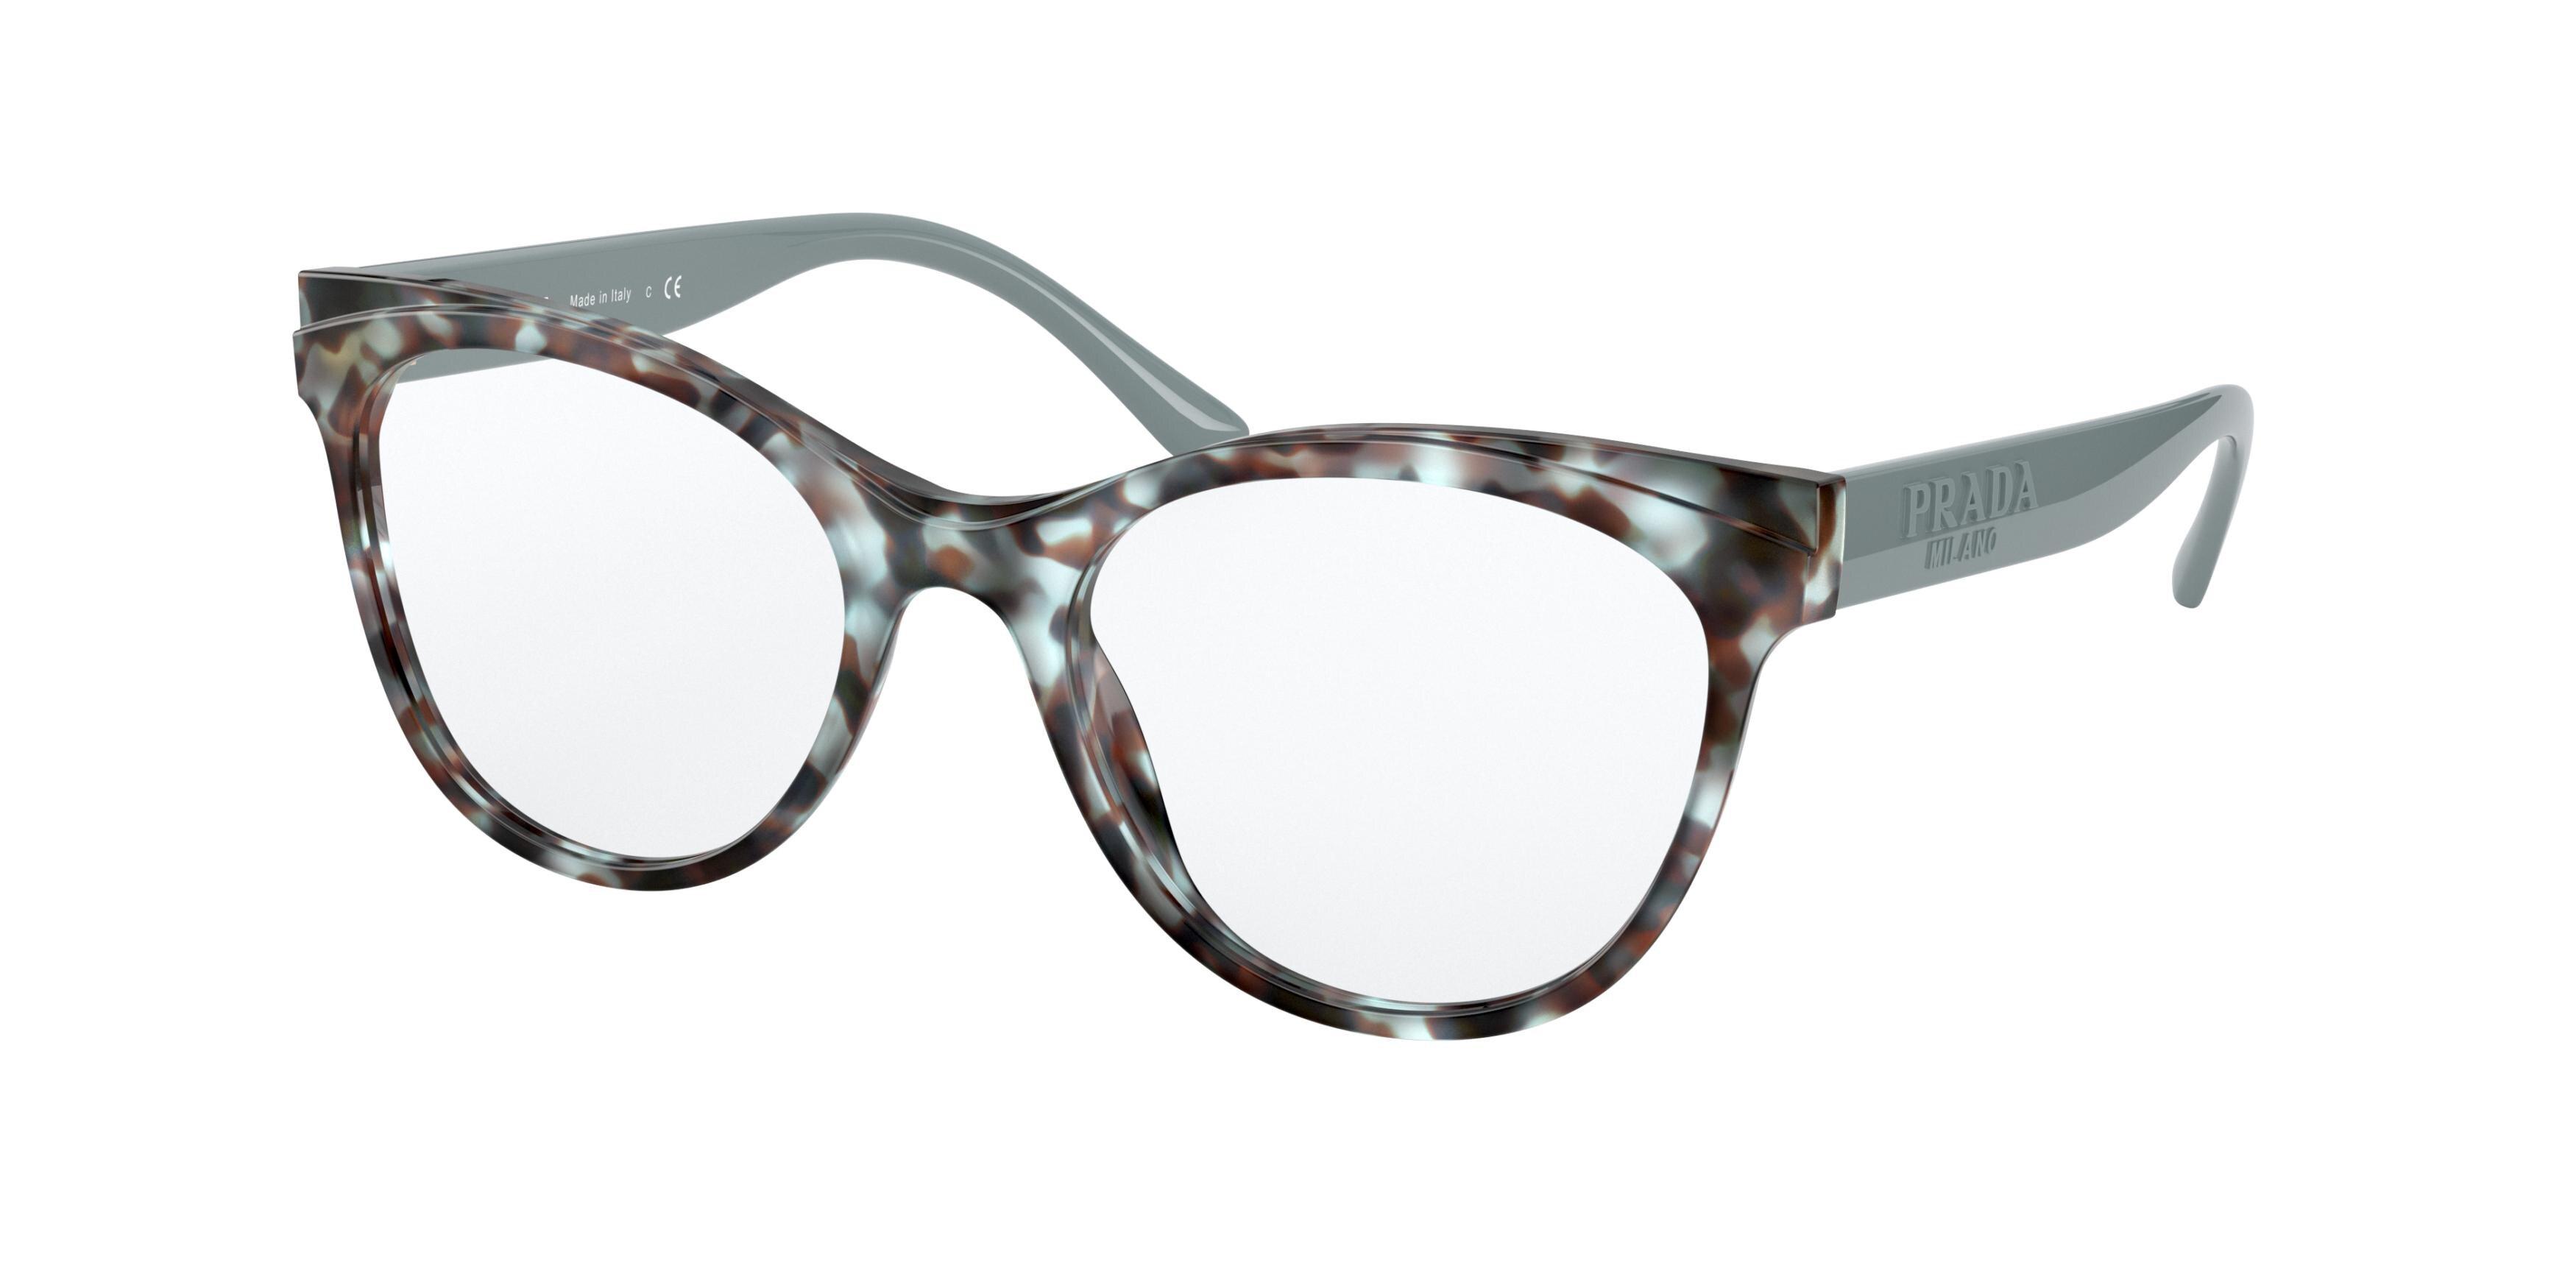 Eyeglasses Prada PR 5 WV 05H1O1 Blue/Brown - image 1 of 2